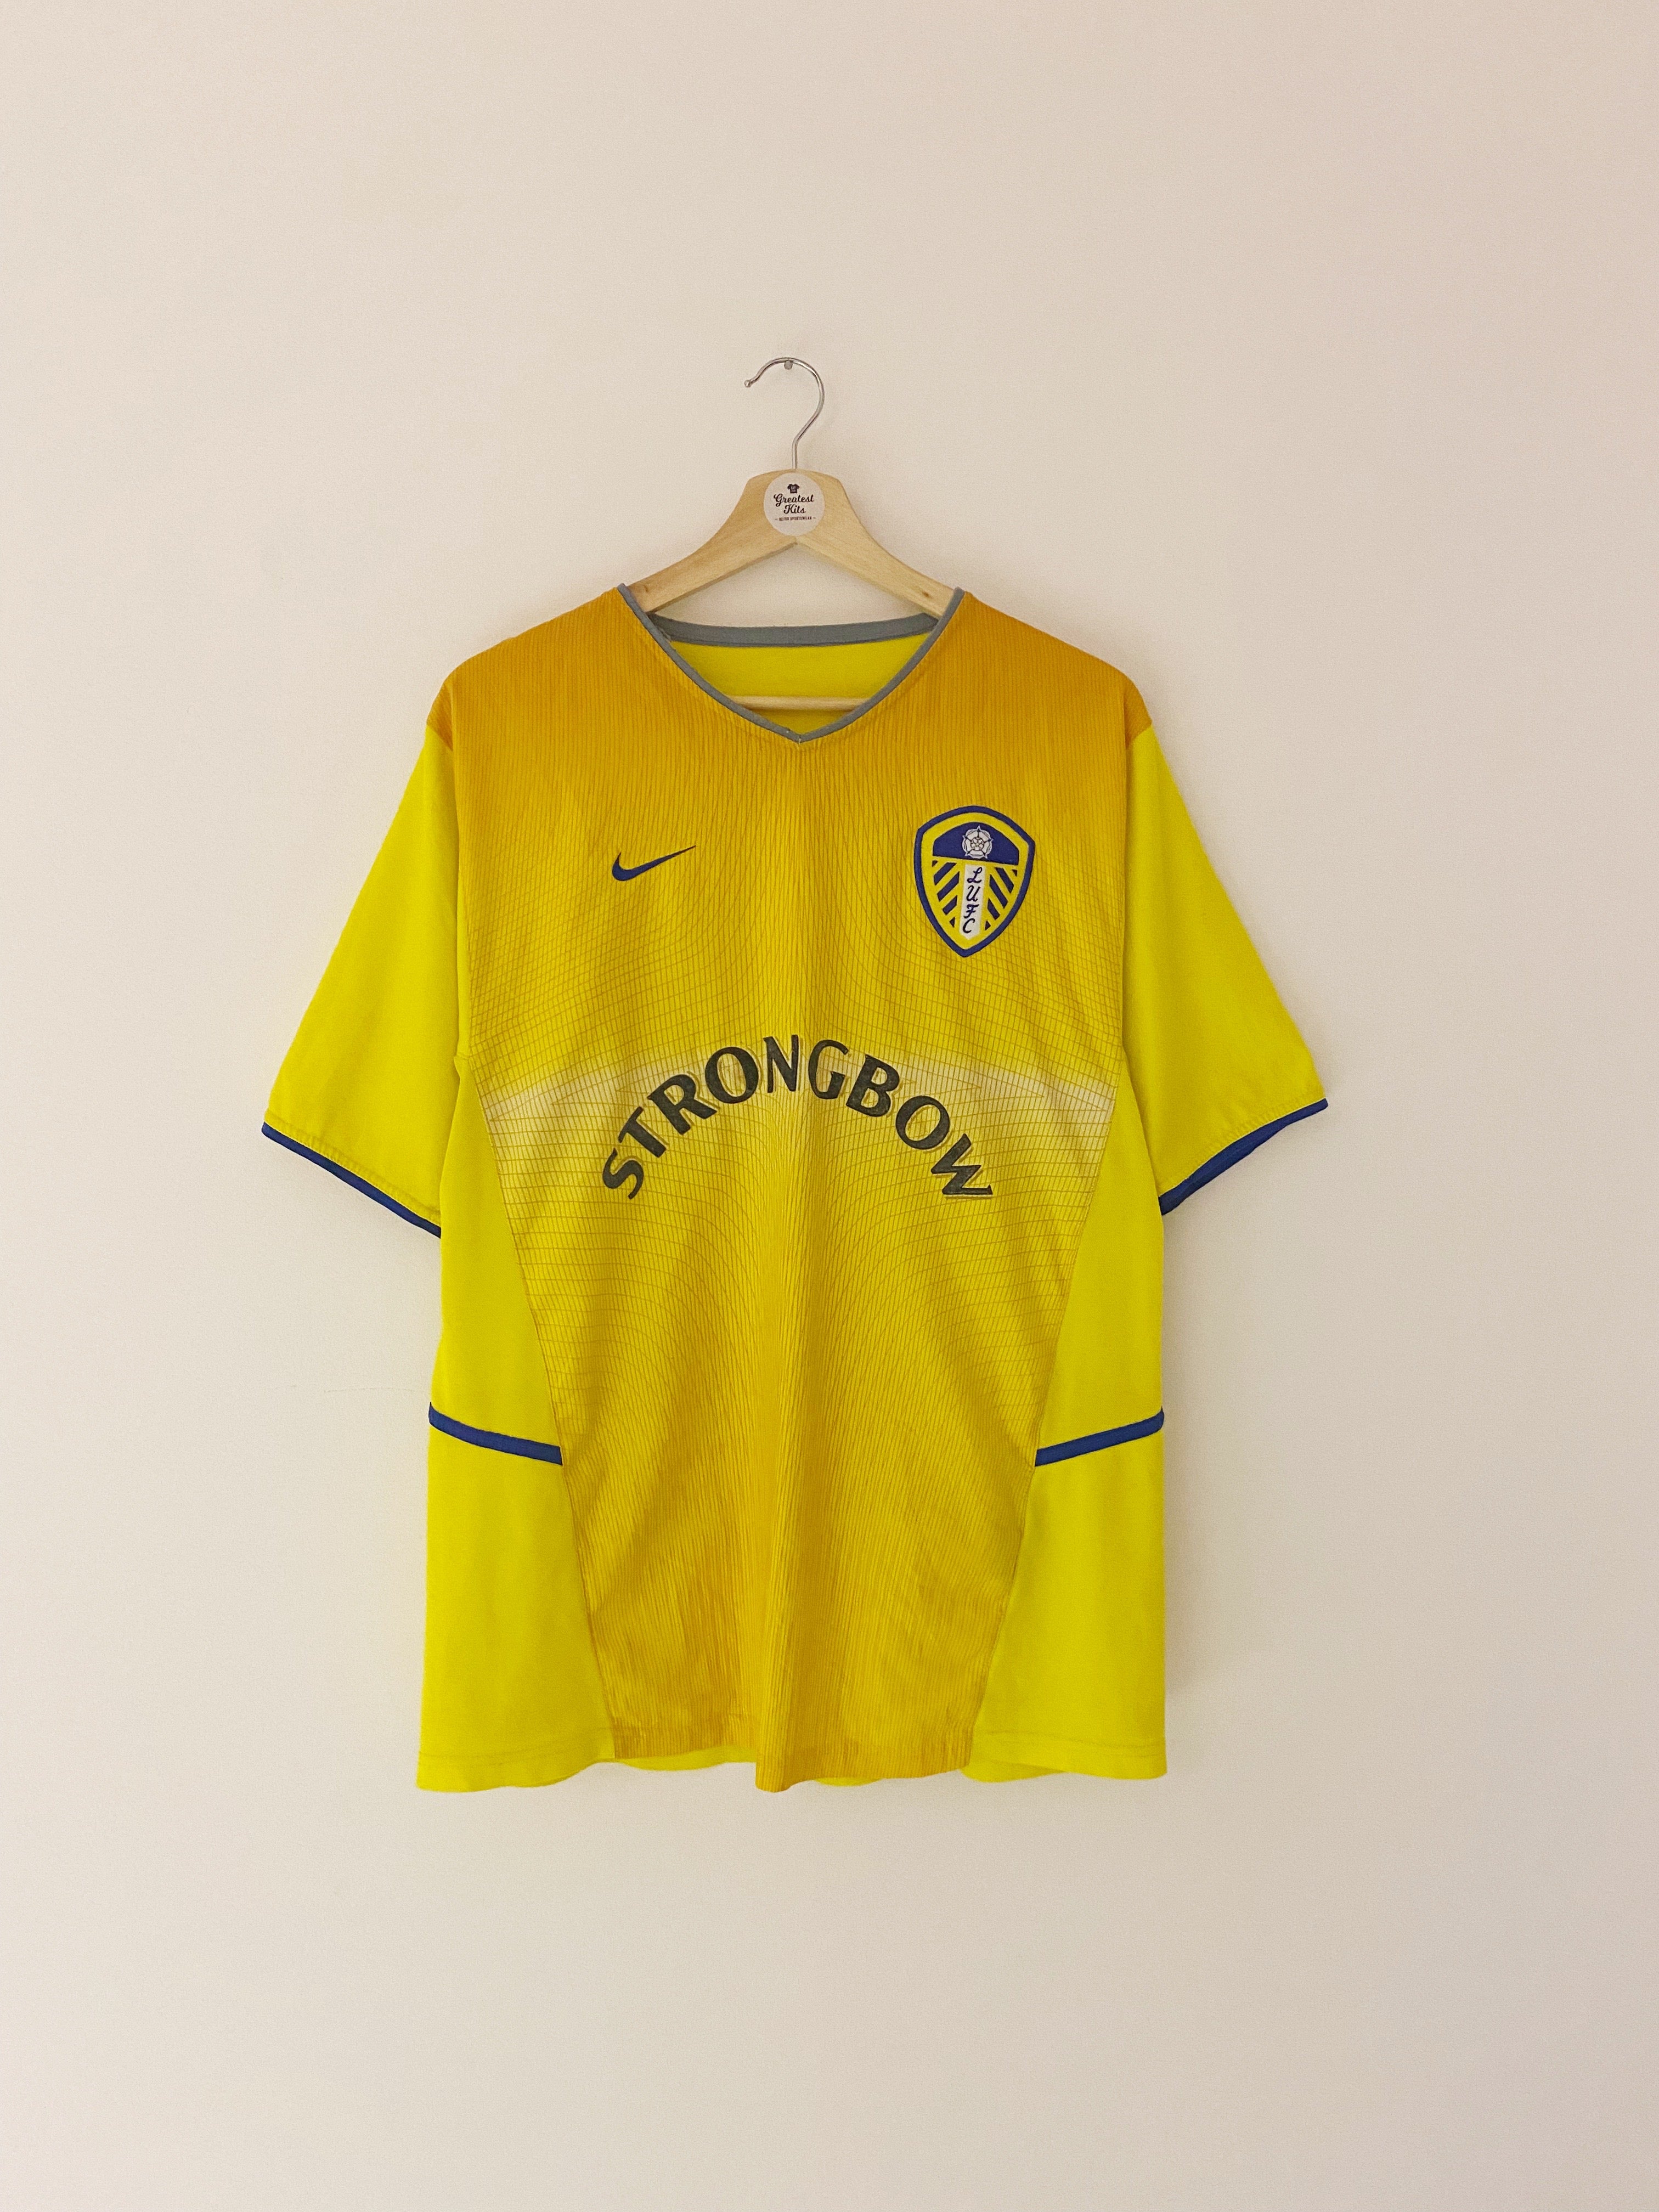 2002/03 Leeds United Away Shirt (L) 7.5/10